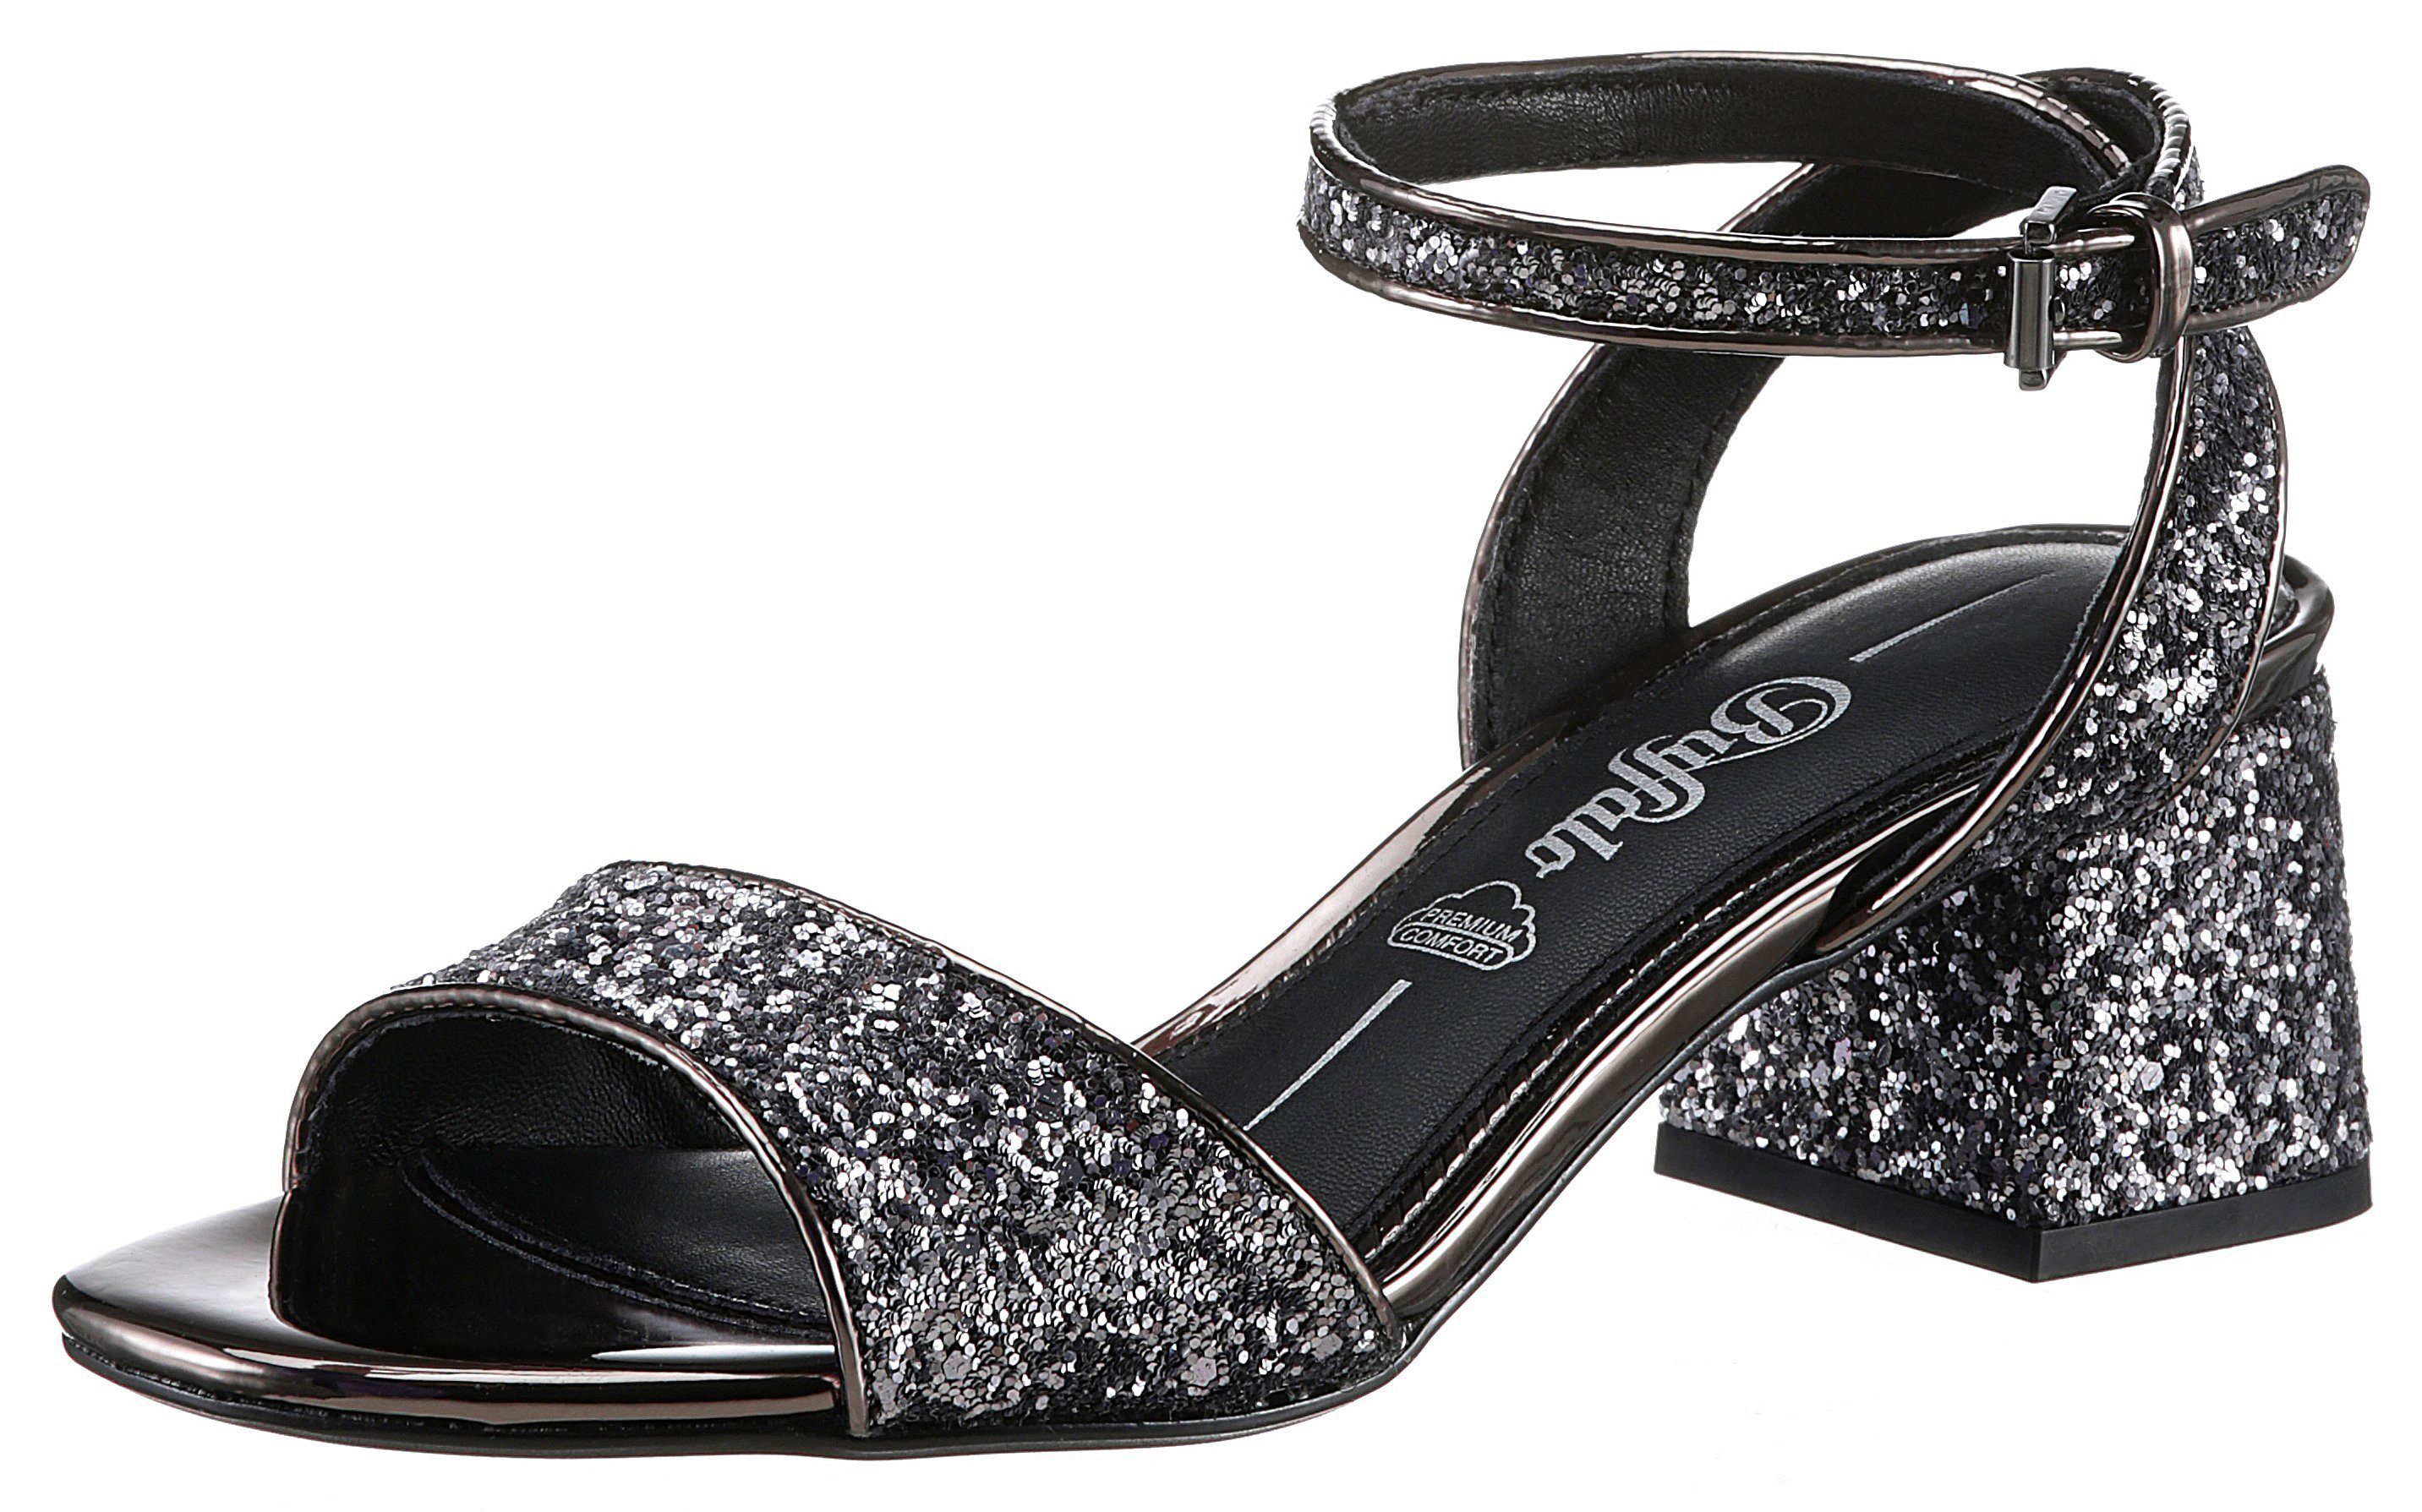 Buffalo RAINFELLE Sandalette mit gepolsterter Memory Foam Innensohle grau silberfarben metallic | Sandaletten